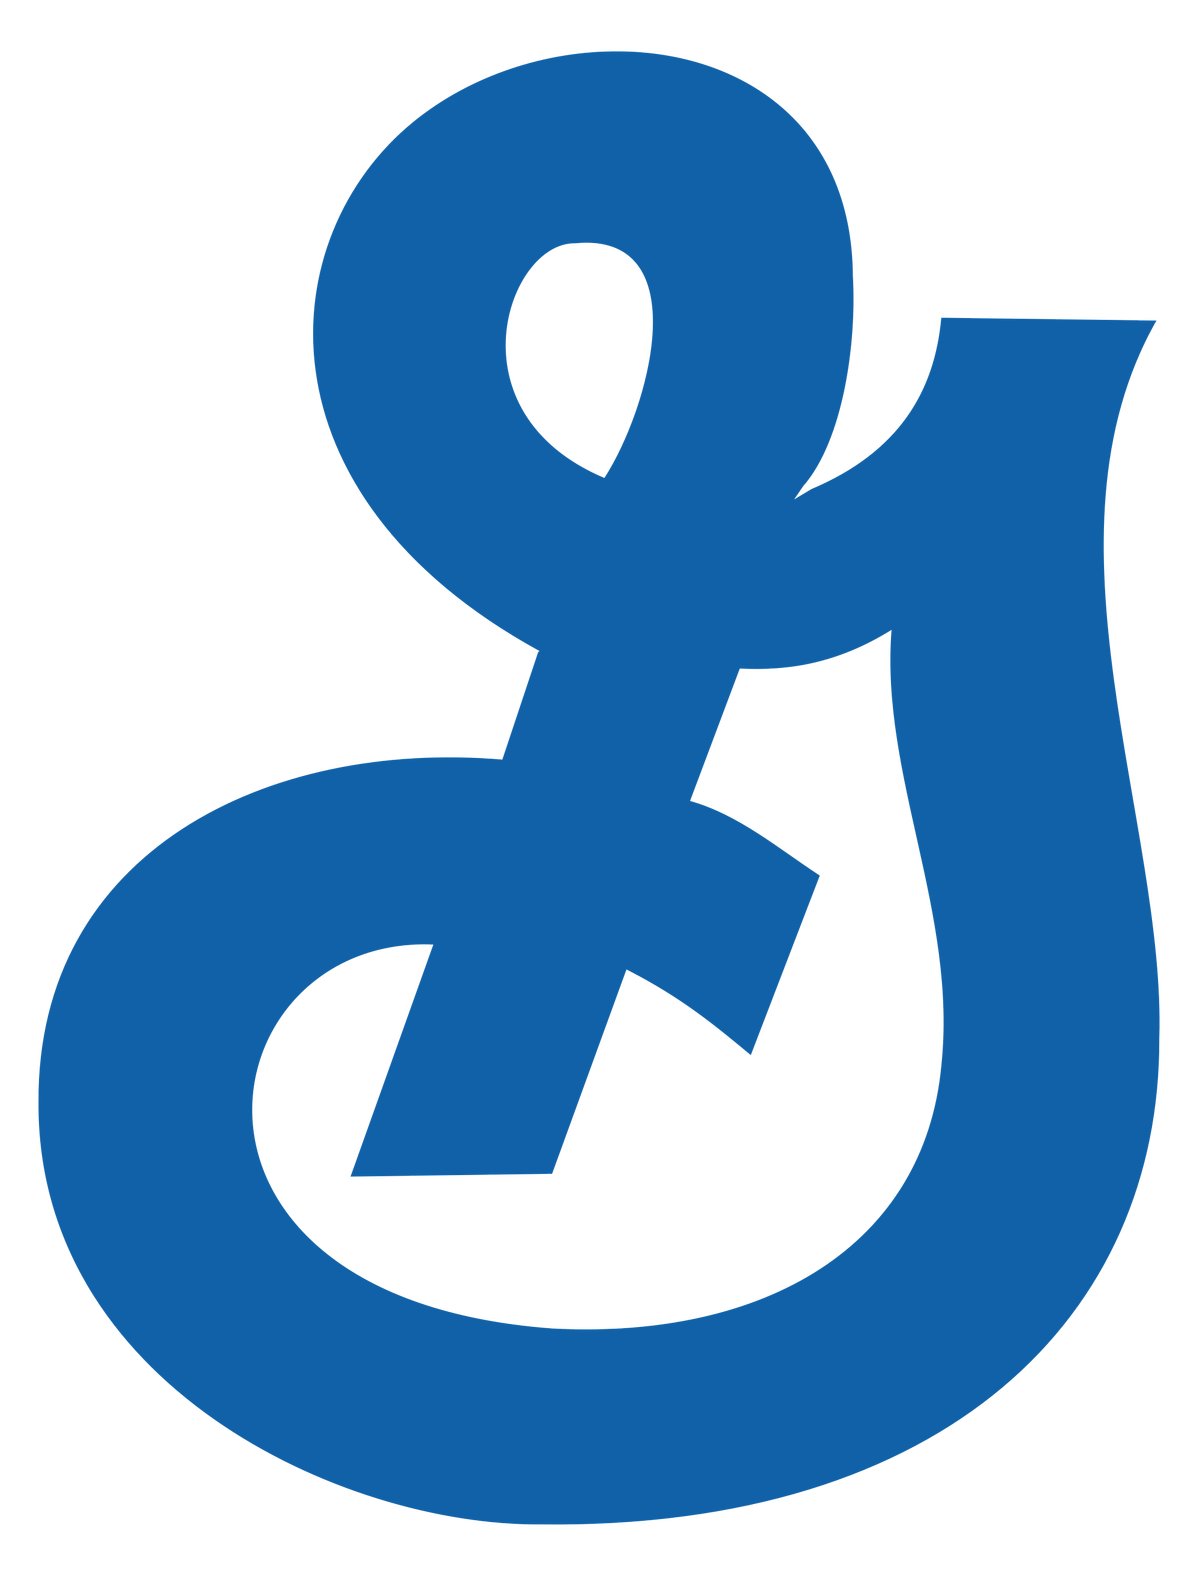 generalmills_logo